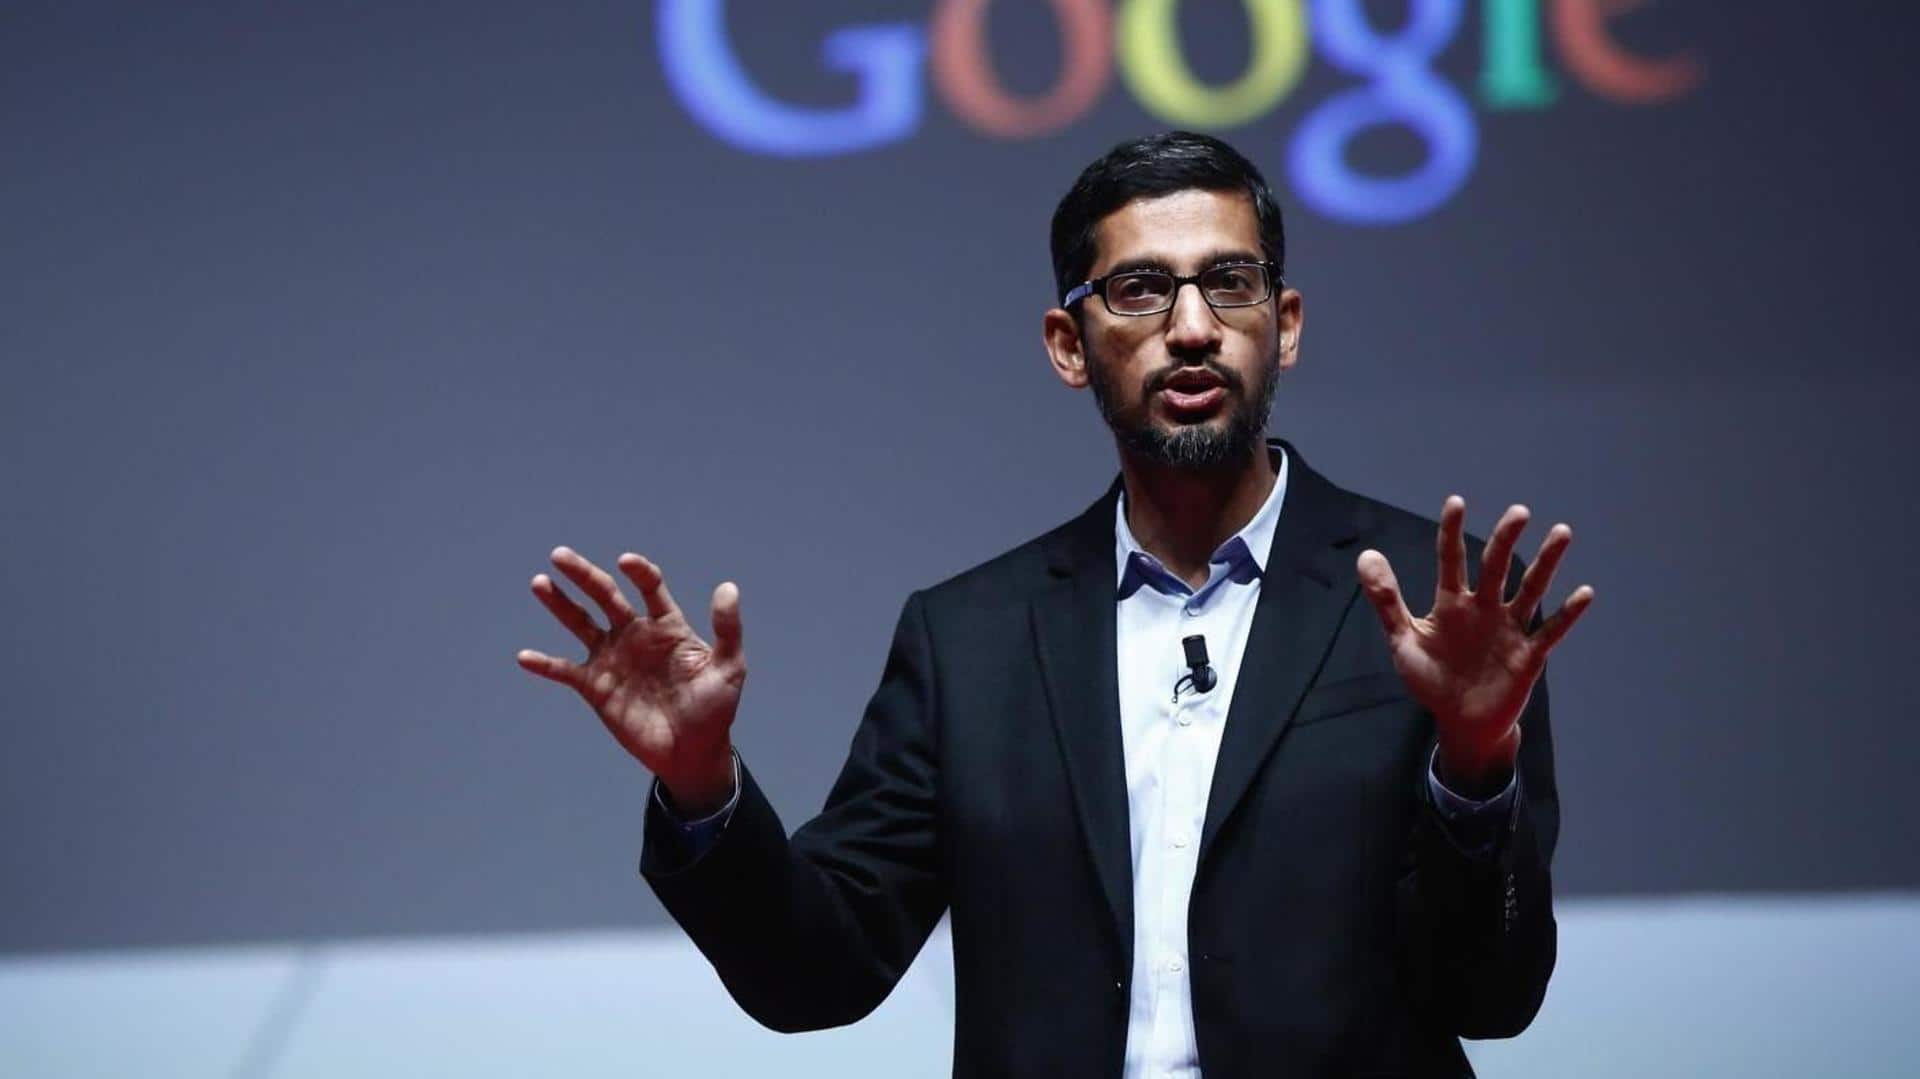 Sundar Pichai confirms Google Search will get Bard AI chatbot